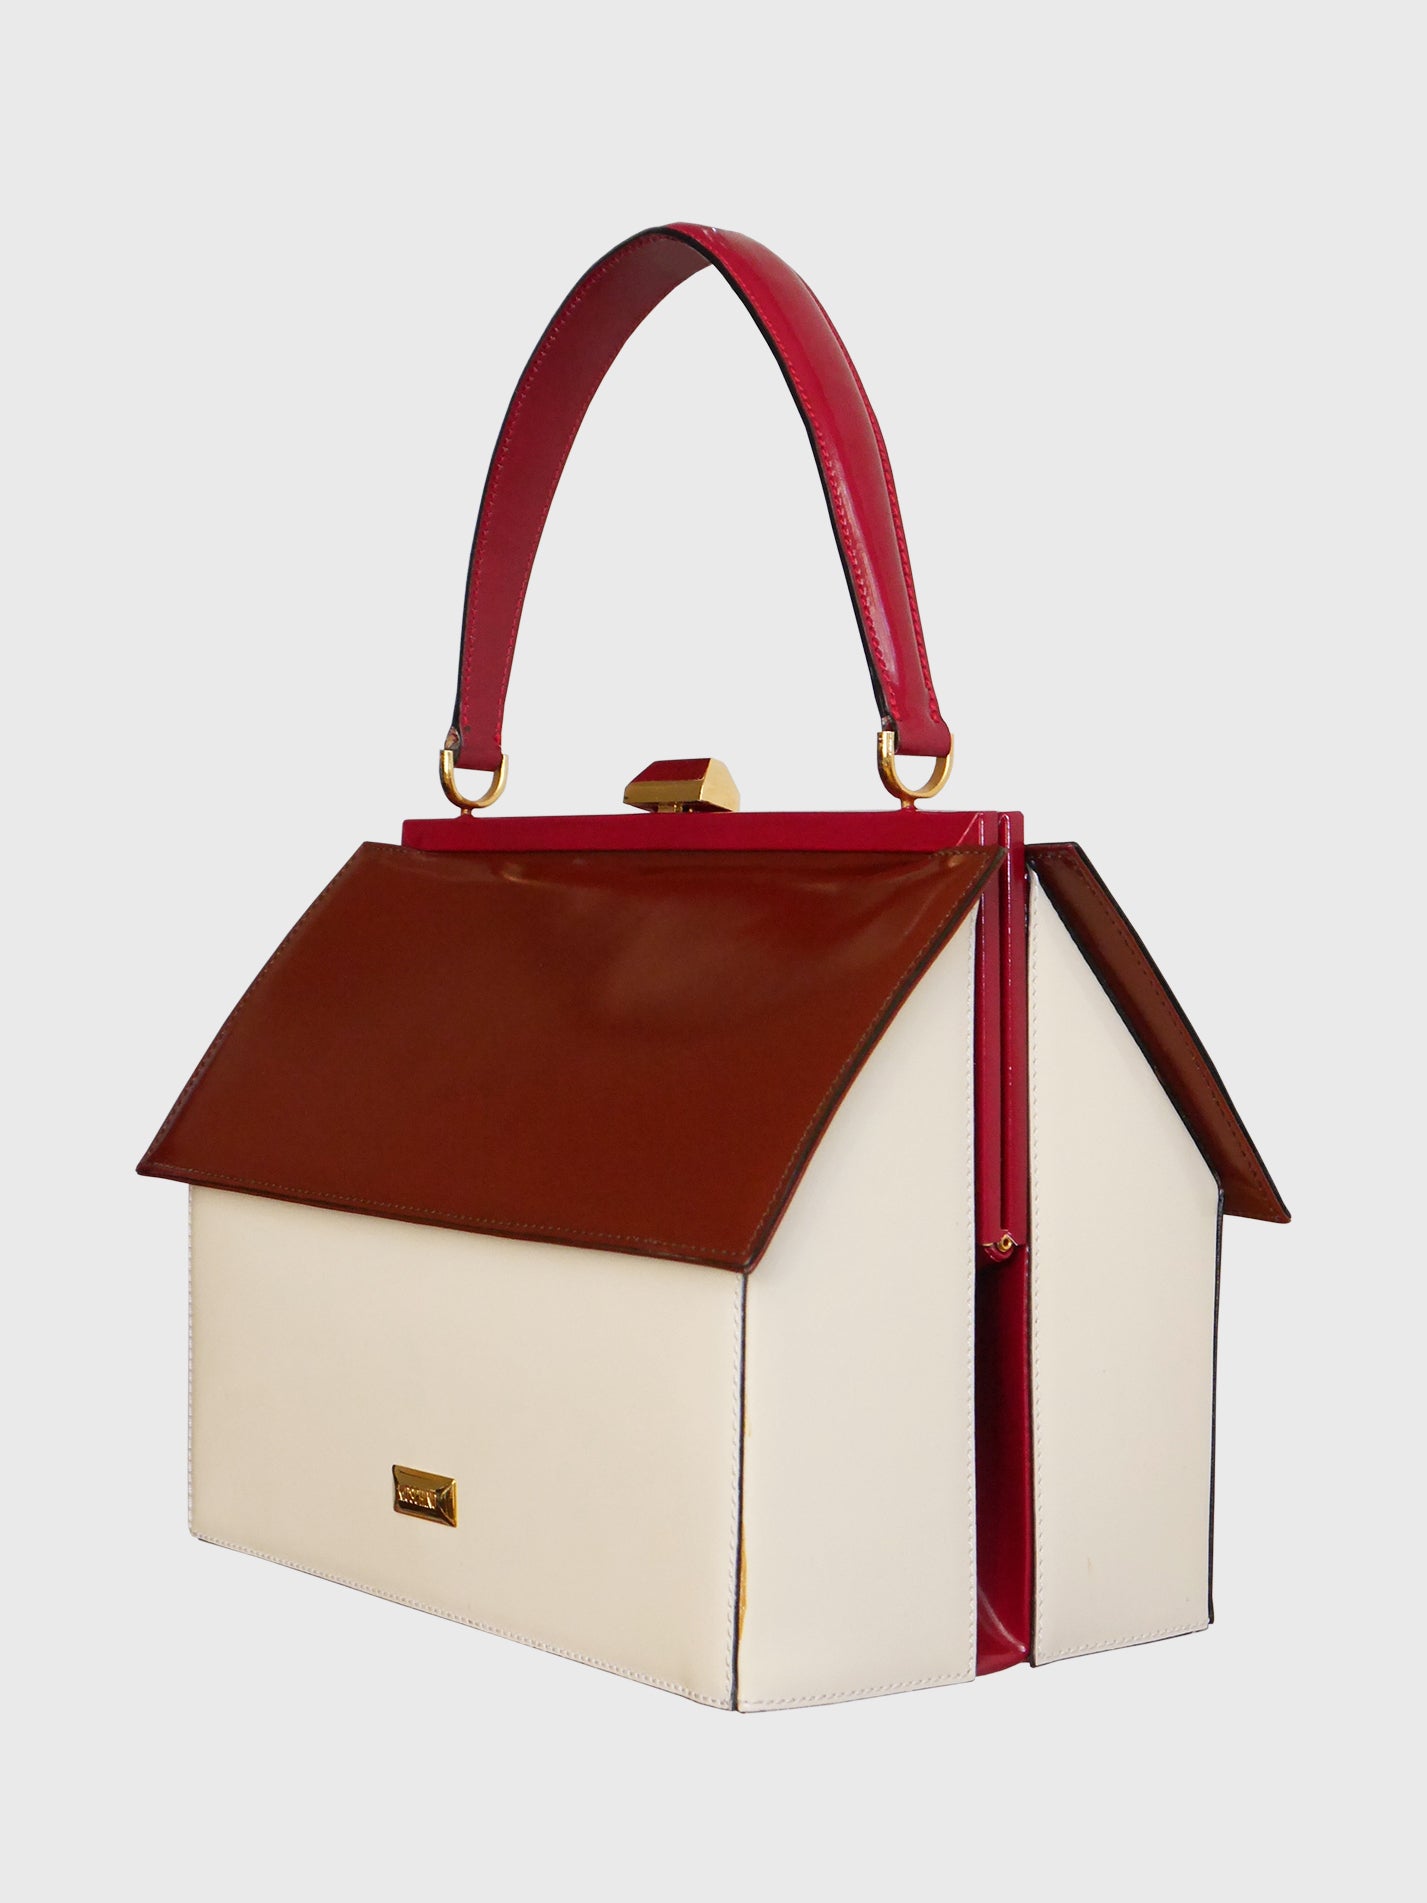 MOSCHINO 1990s Vintage "Maison Moschino" House-Shaped Novelty Handbag